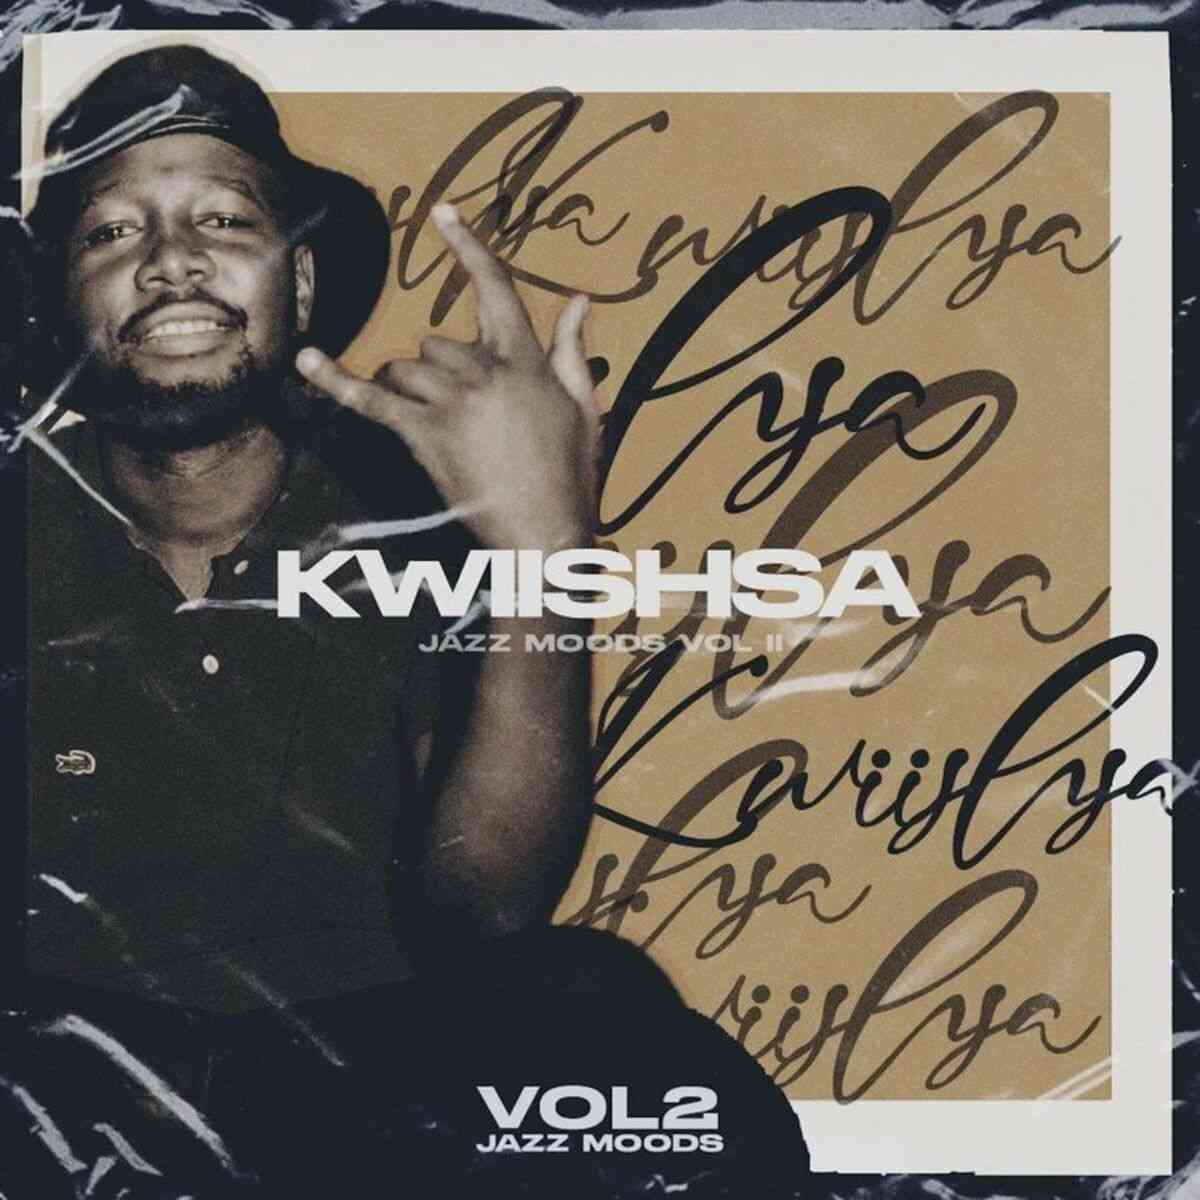 Kwiish SA - The Jazz Mood Vol. 2 EP